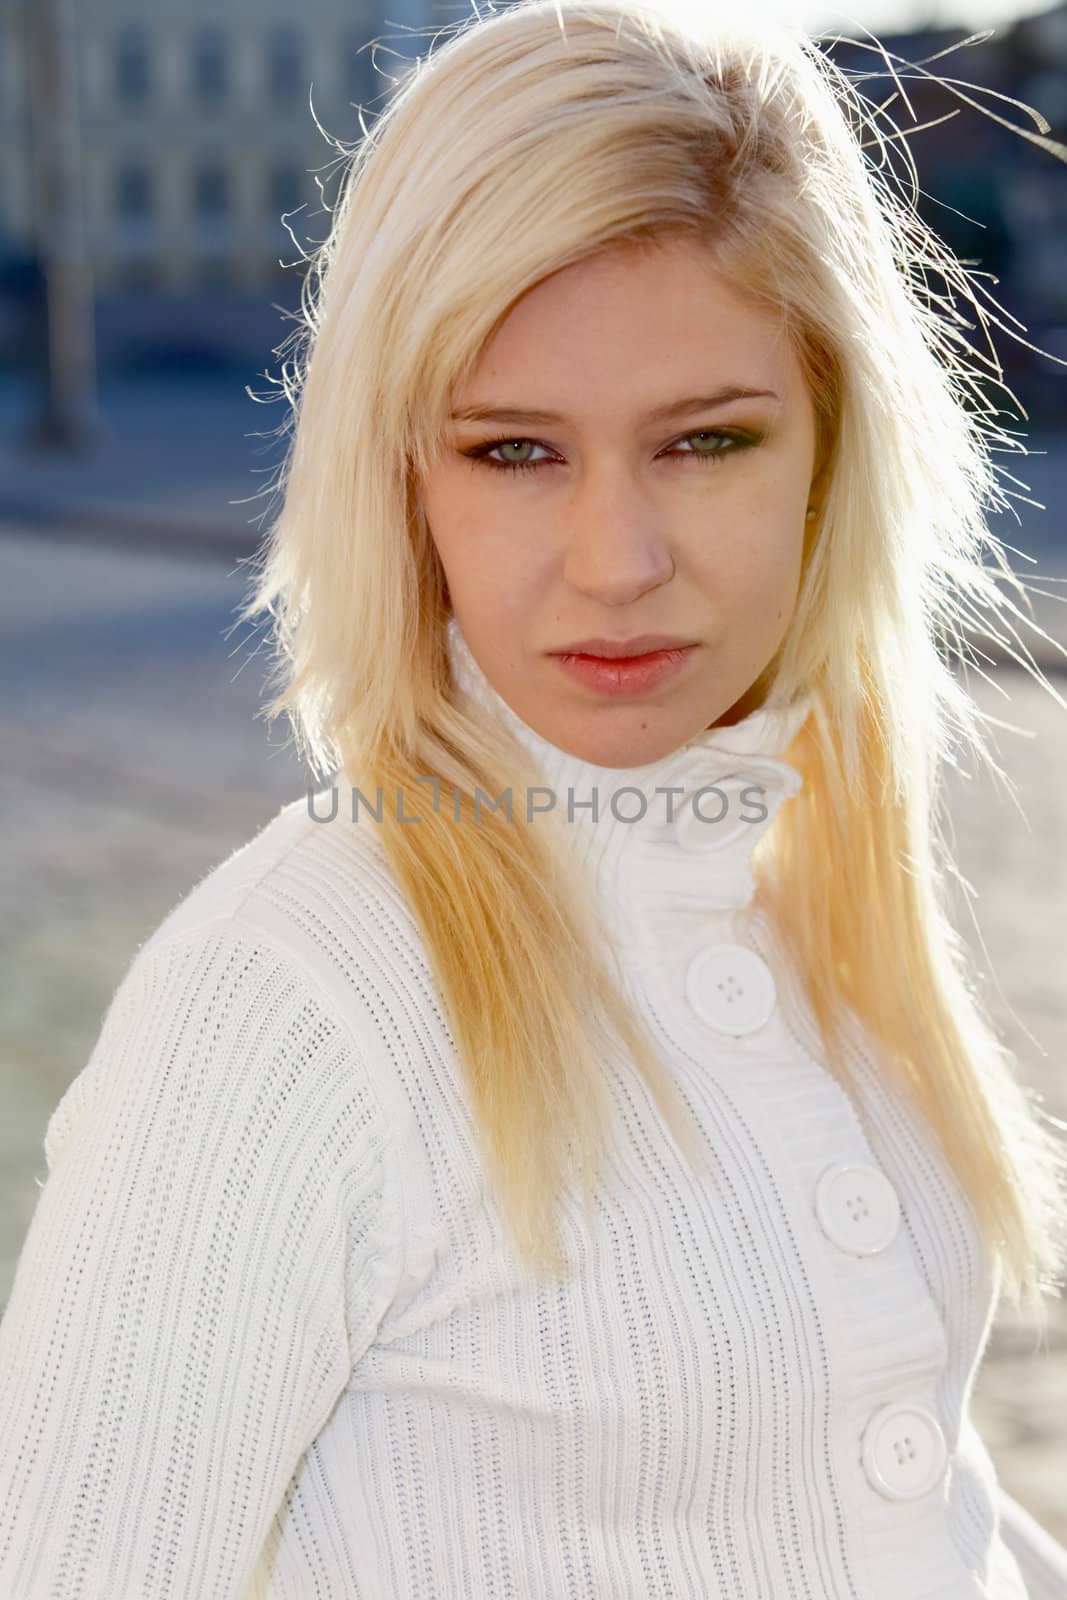 Teenage girl looking at camera, exterior in city